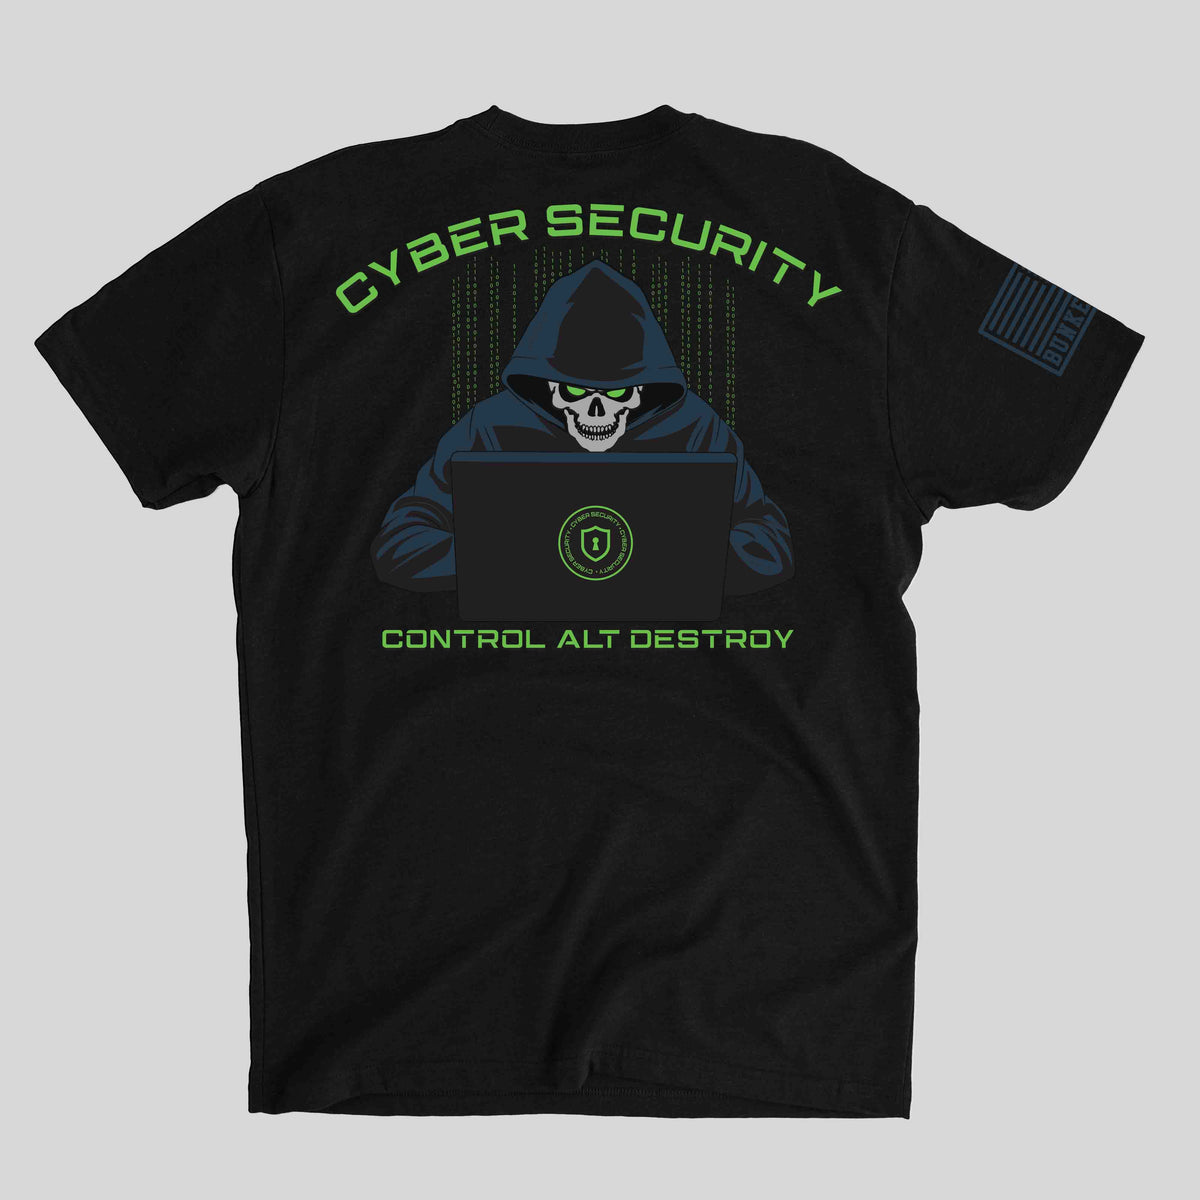 Cyber Security Control, Alt, Control